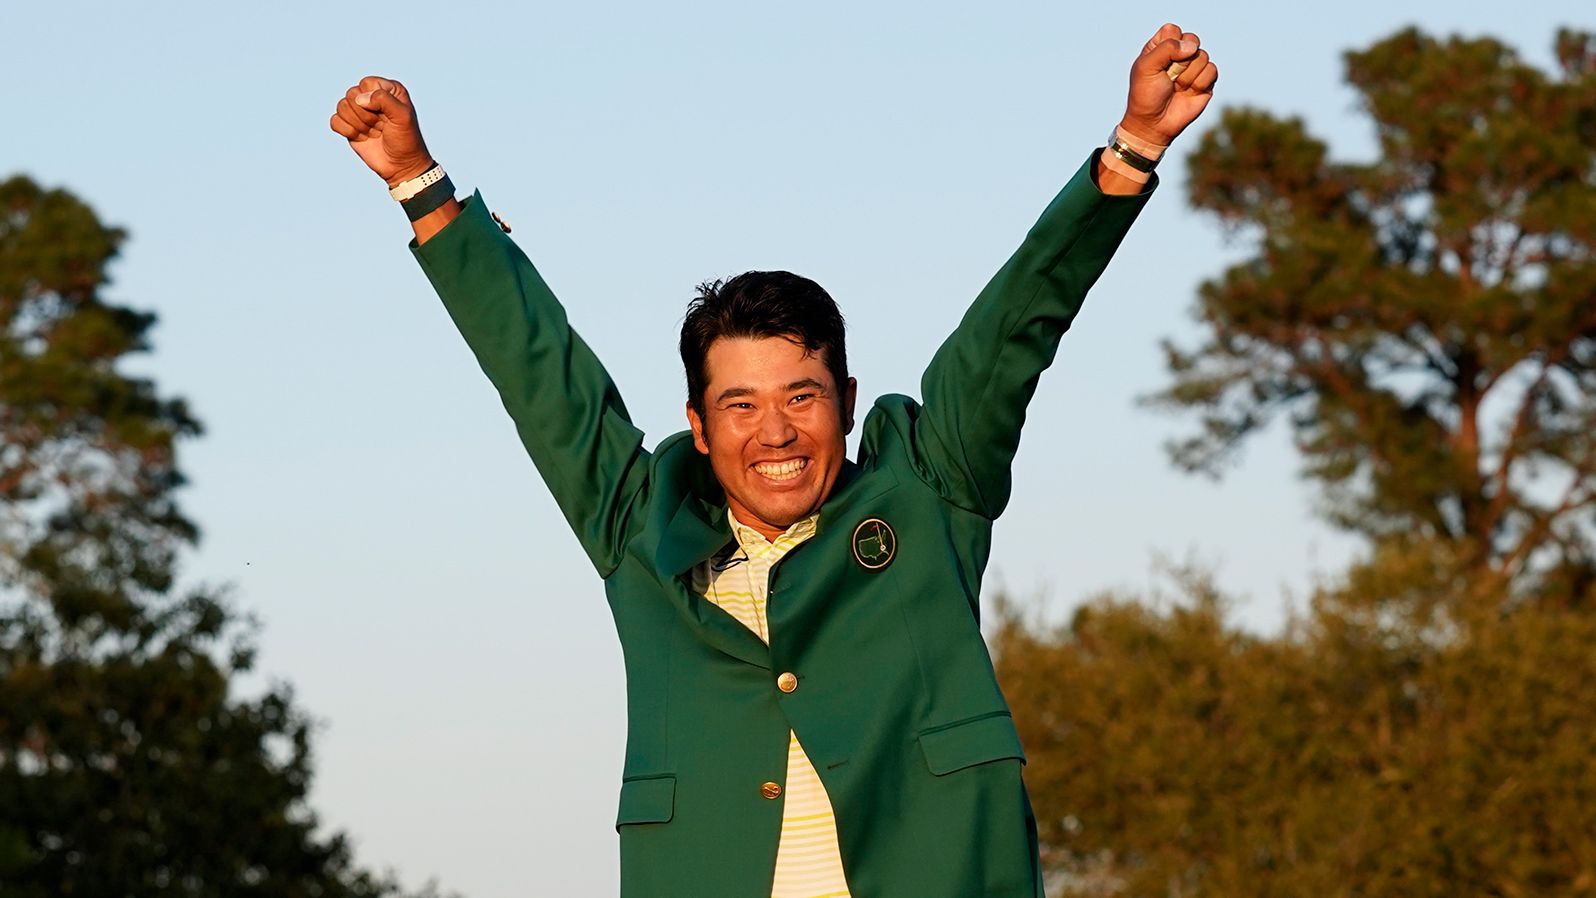 Hideki Matsuyama celebrates with the green jacket after winning the Masters golf tournament on Sunday, April 11. He finished one shot ahead of Will Zalatoris.